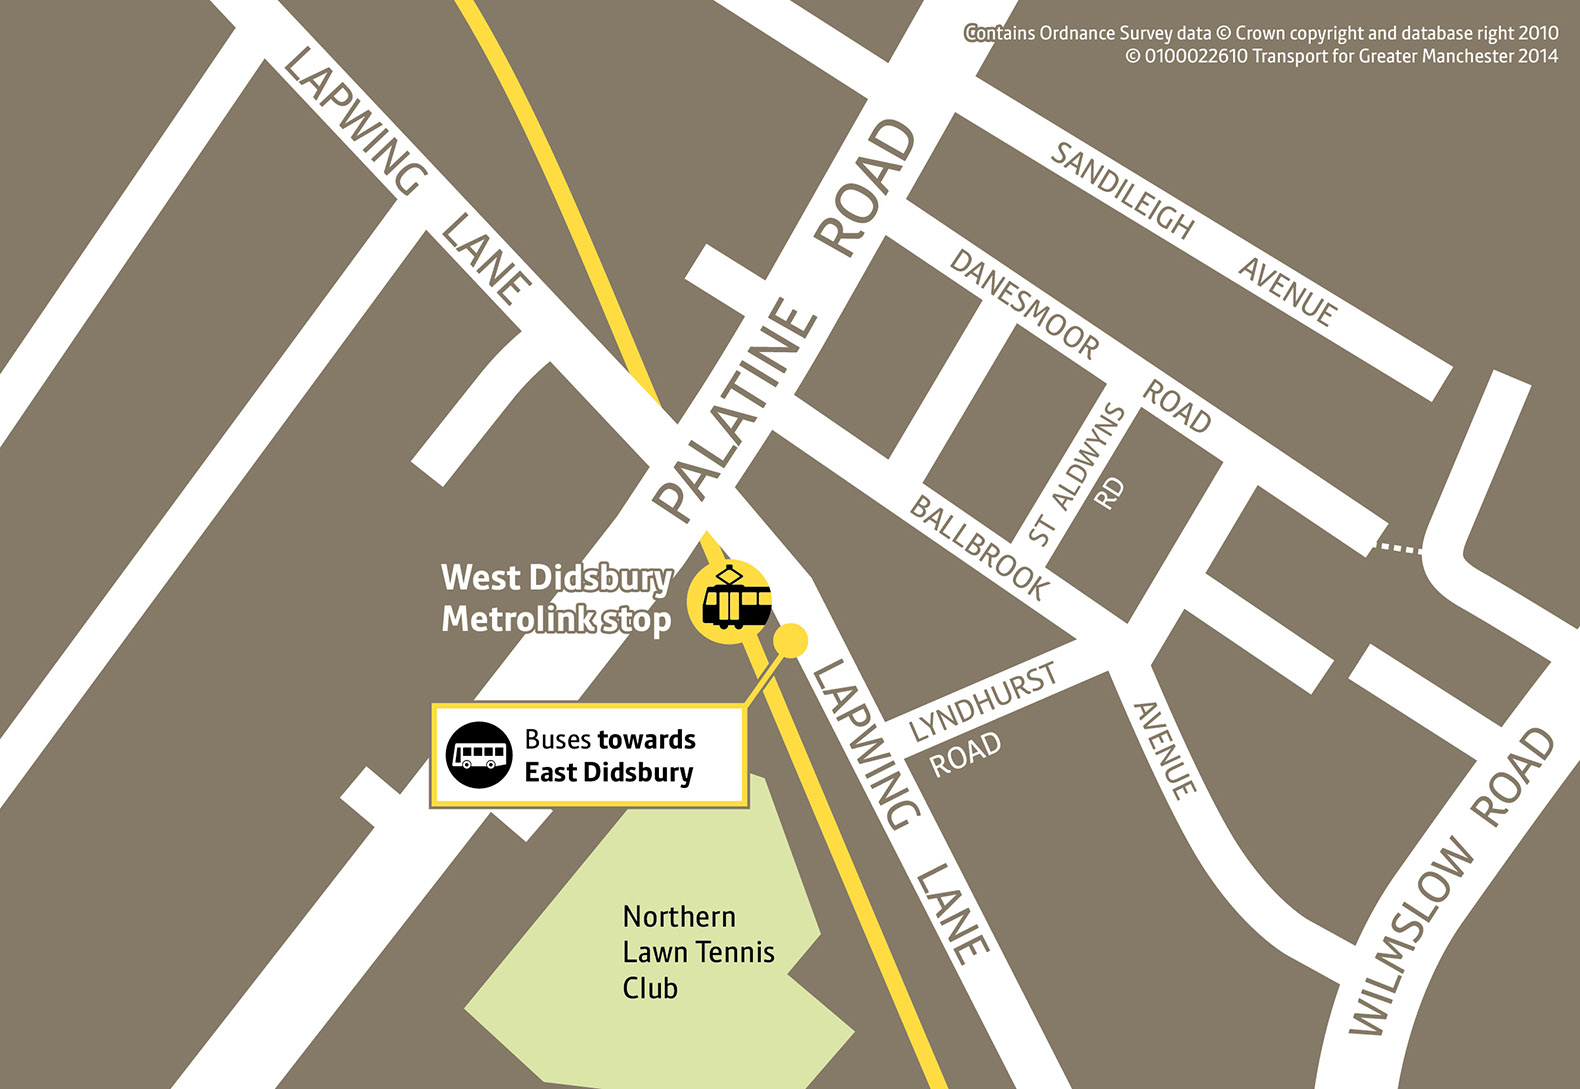 West Didsbury Metrolink bus replacement stop